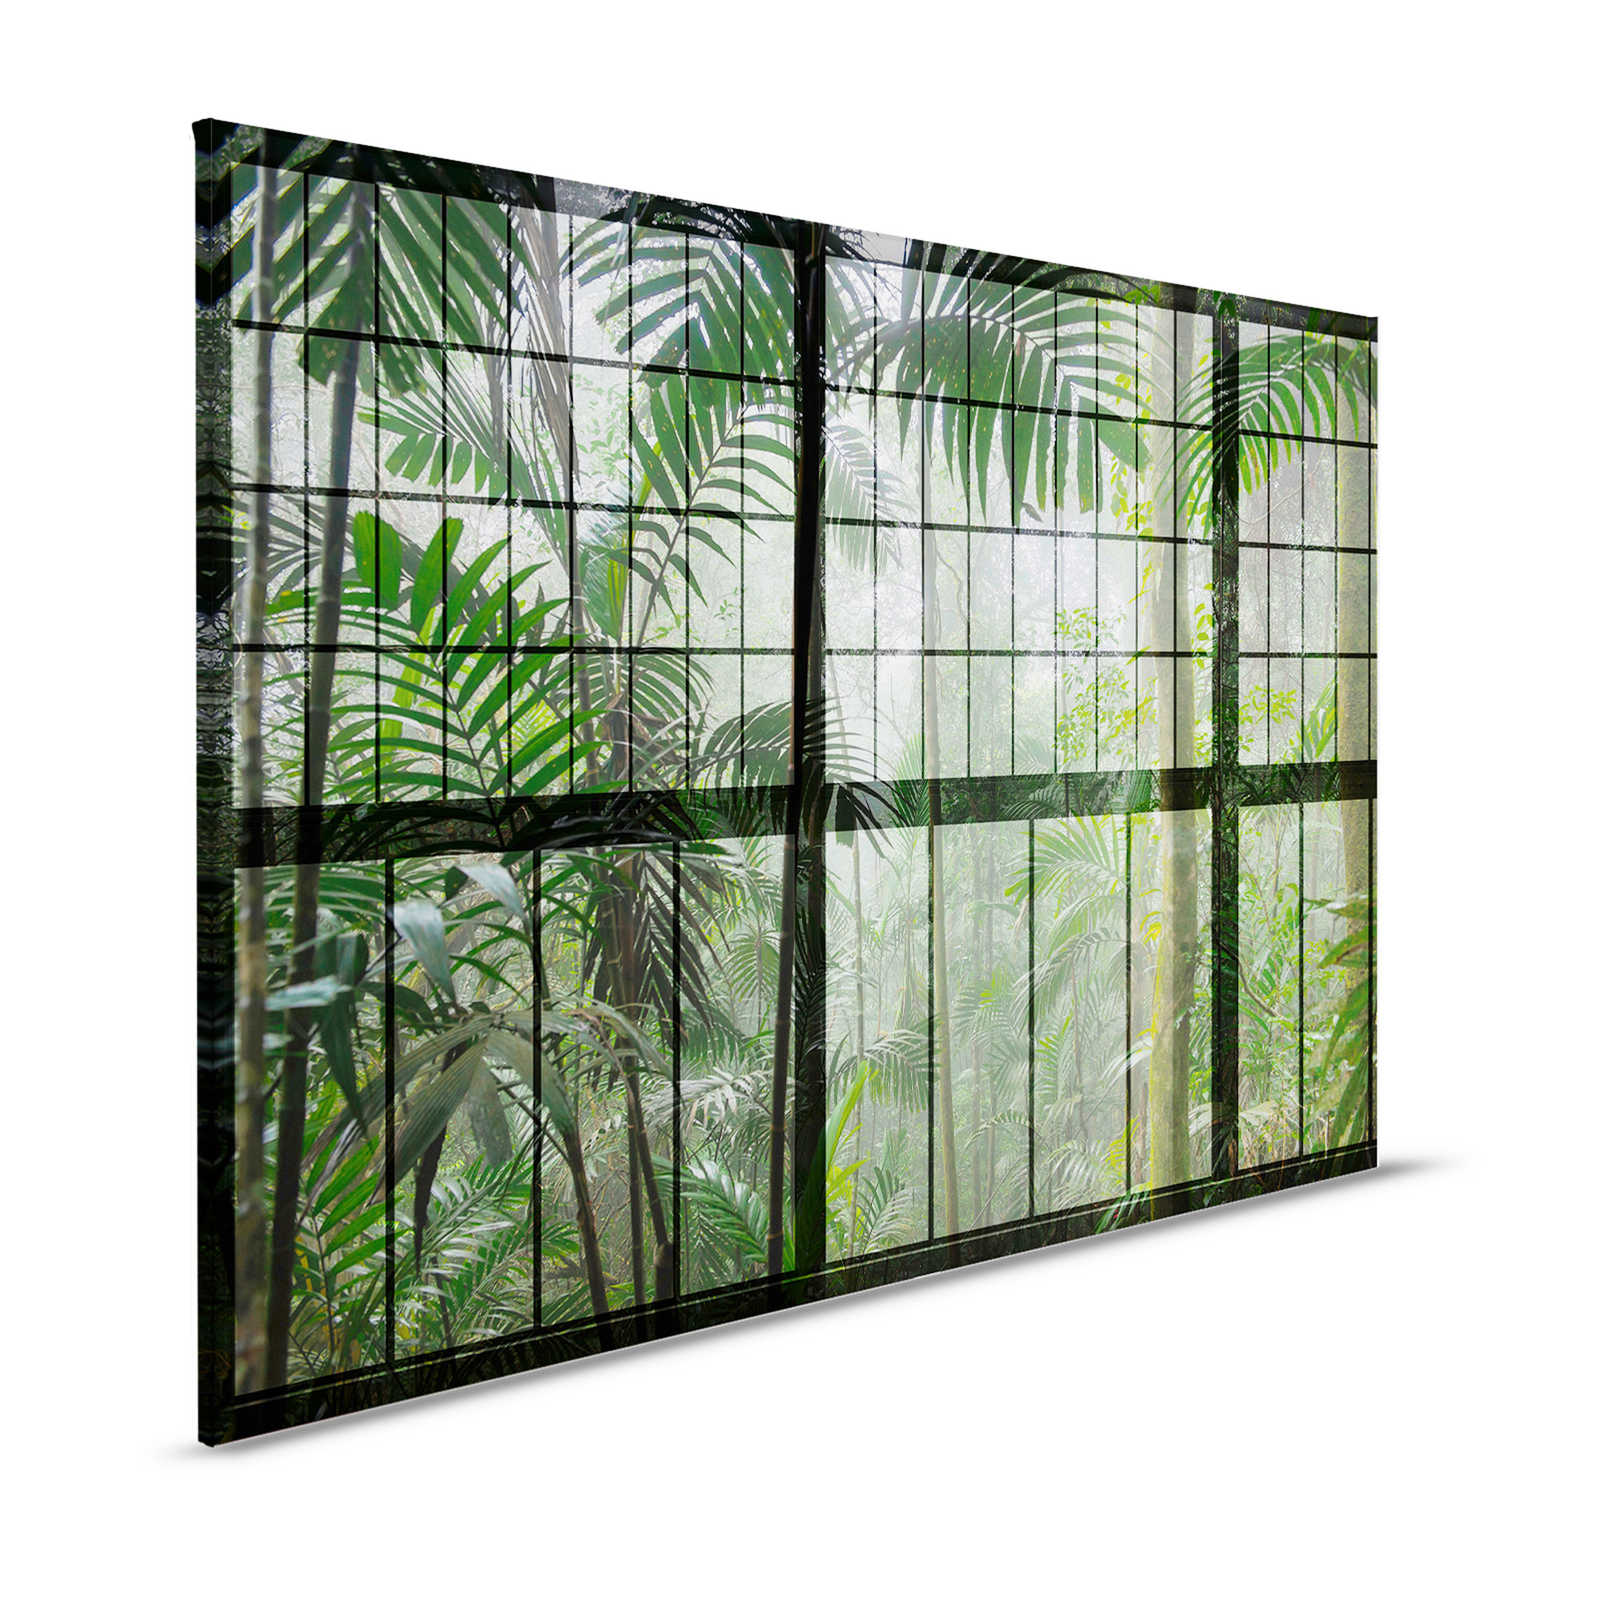 Rainforest 1 - Loft Window Canvas Painting with Jungle View - 1.20 m x 0.80 m
